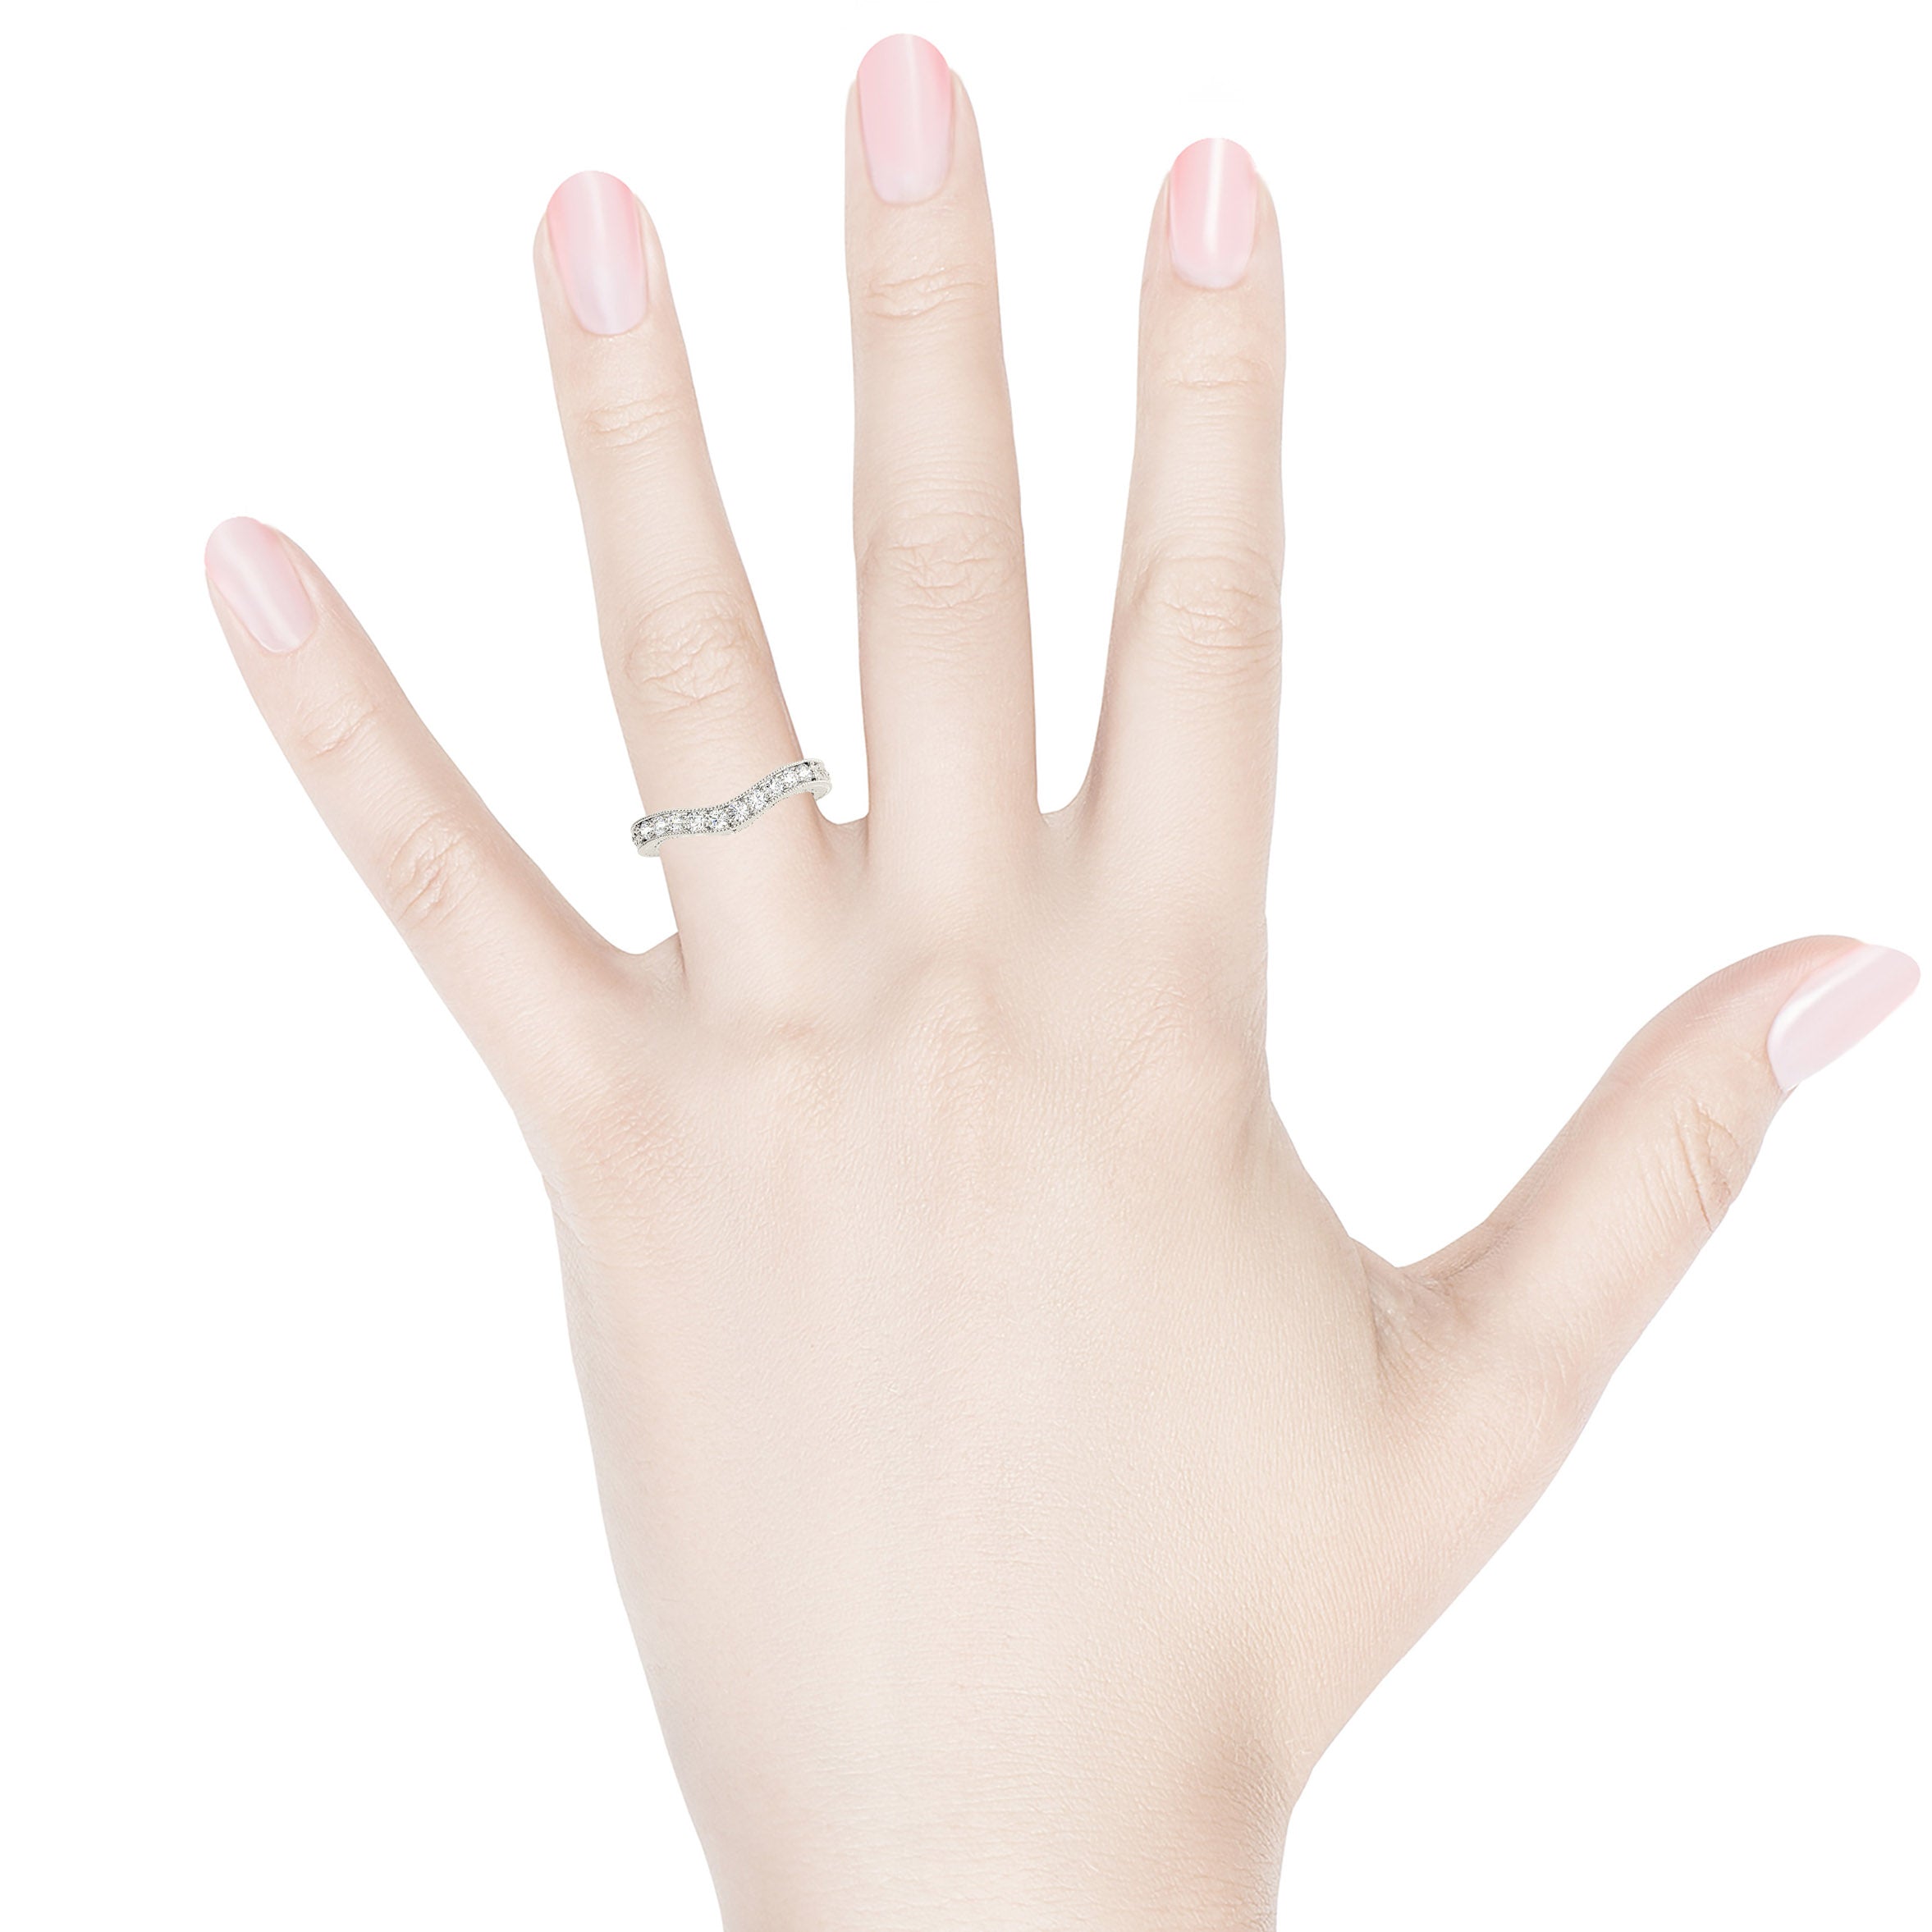 Diamond Wedding Band - 14K/18k Solid White Gold / Platinum | Hand Engraved Curved Band | Diamond Anniversary Ring | Modern Design-in 14K/18K White, Yellow, Rose Gold and Platinum - Christmas Jewelry Gift -VIRABYANI